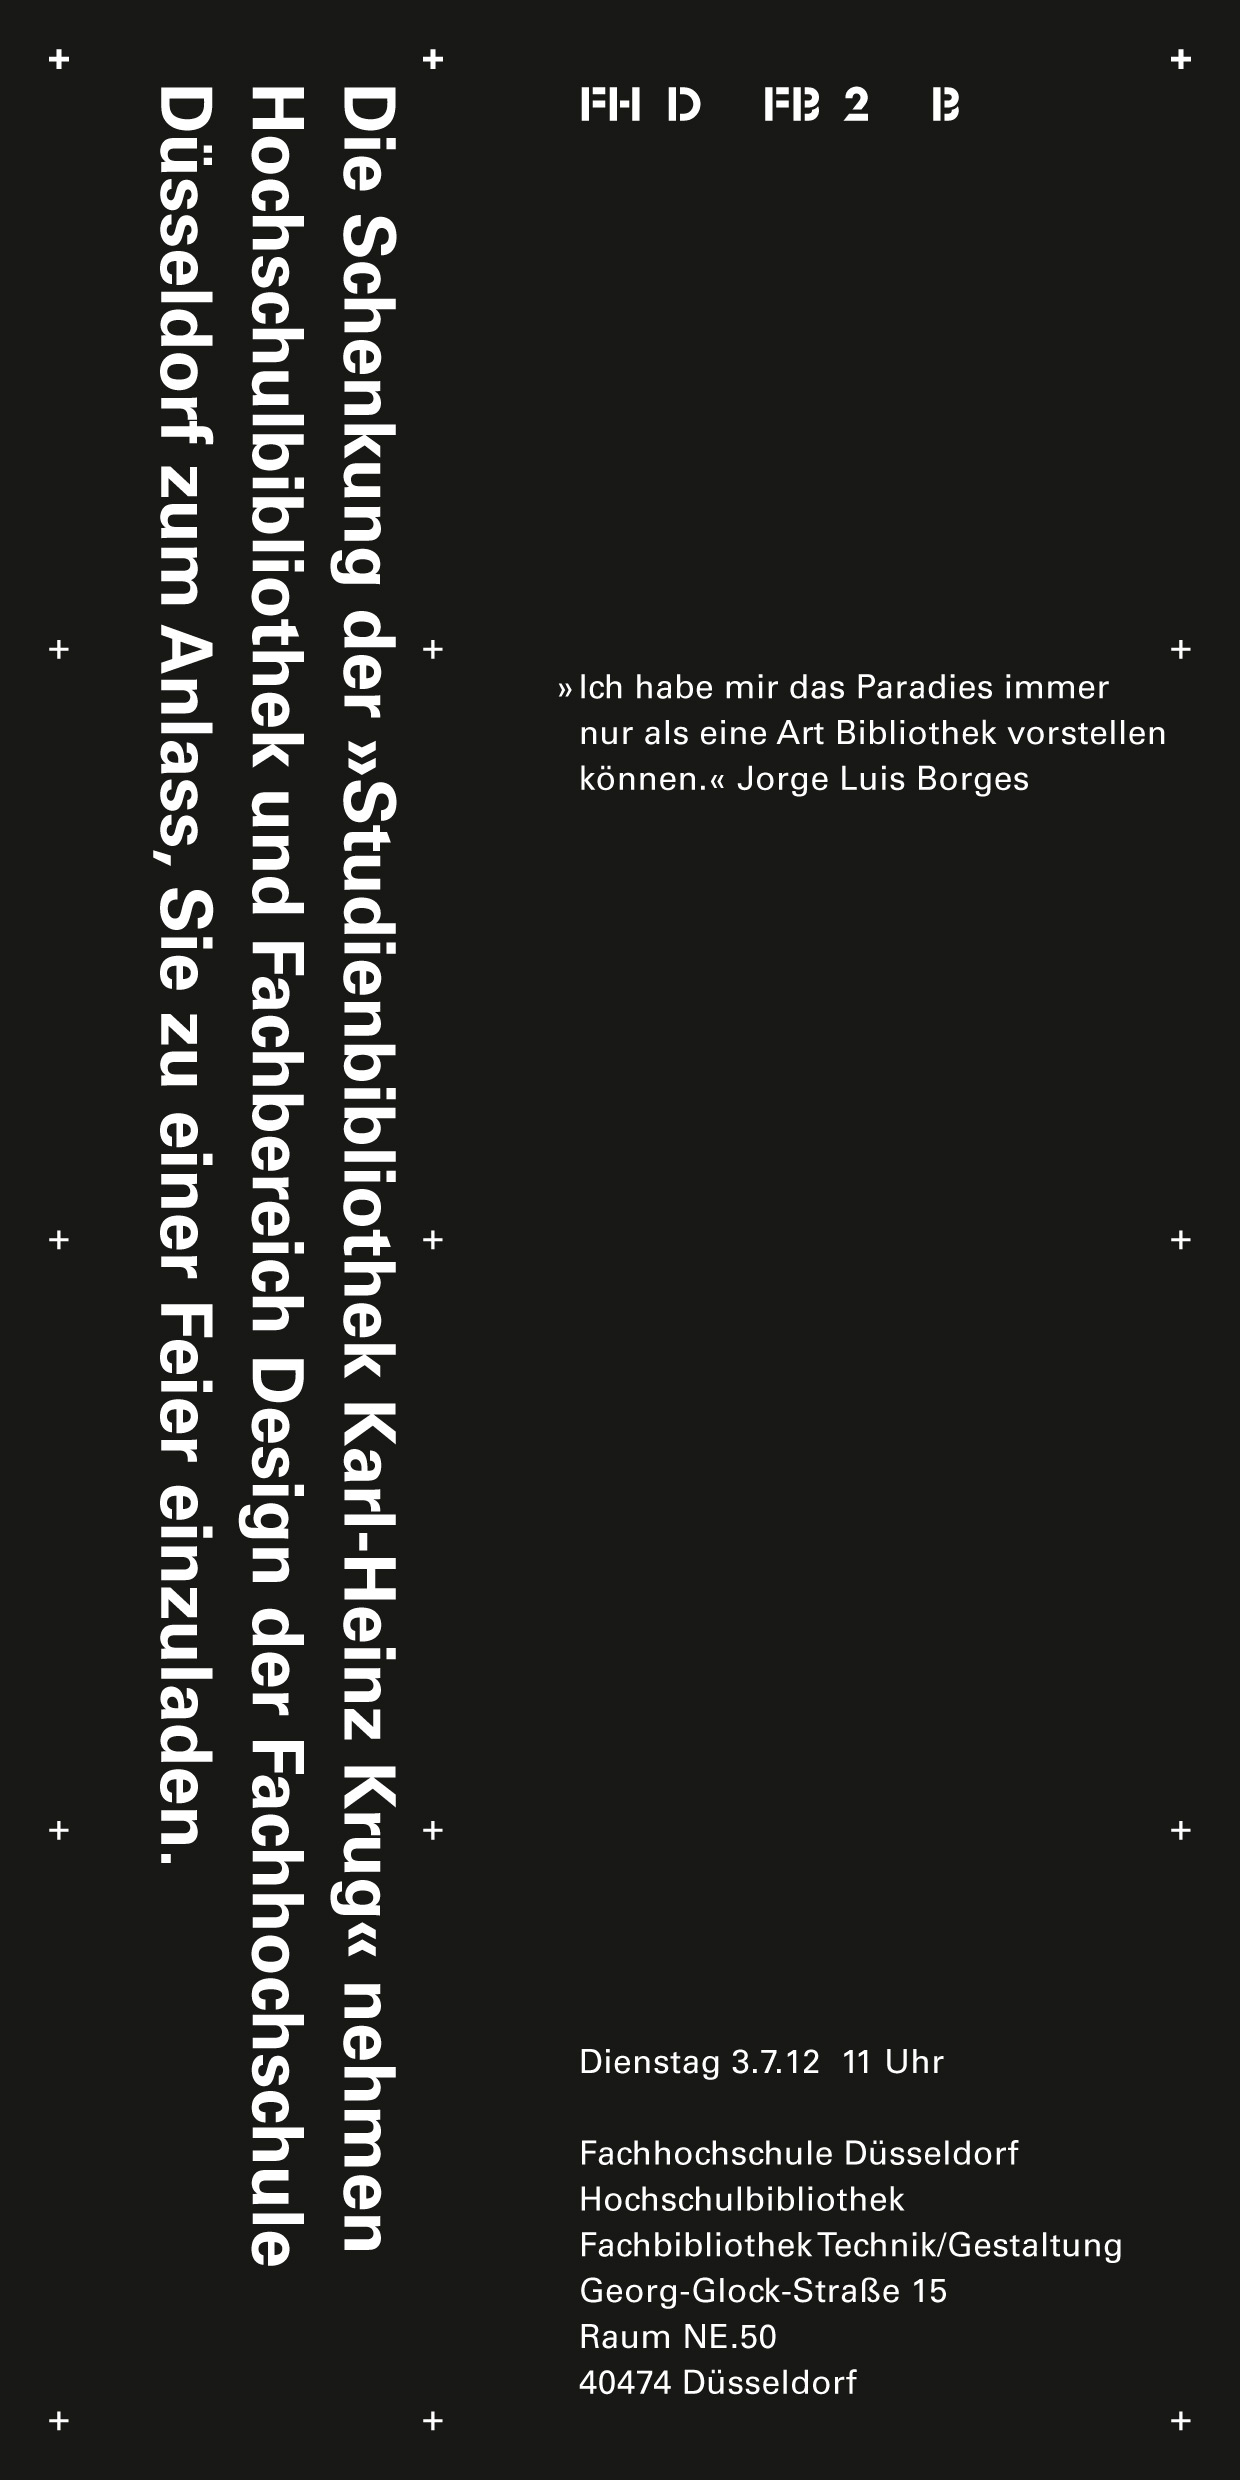 The Karl-Heinz Krug Research Library, Invitation card, Exhibition, David Fischbach